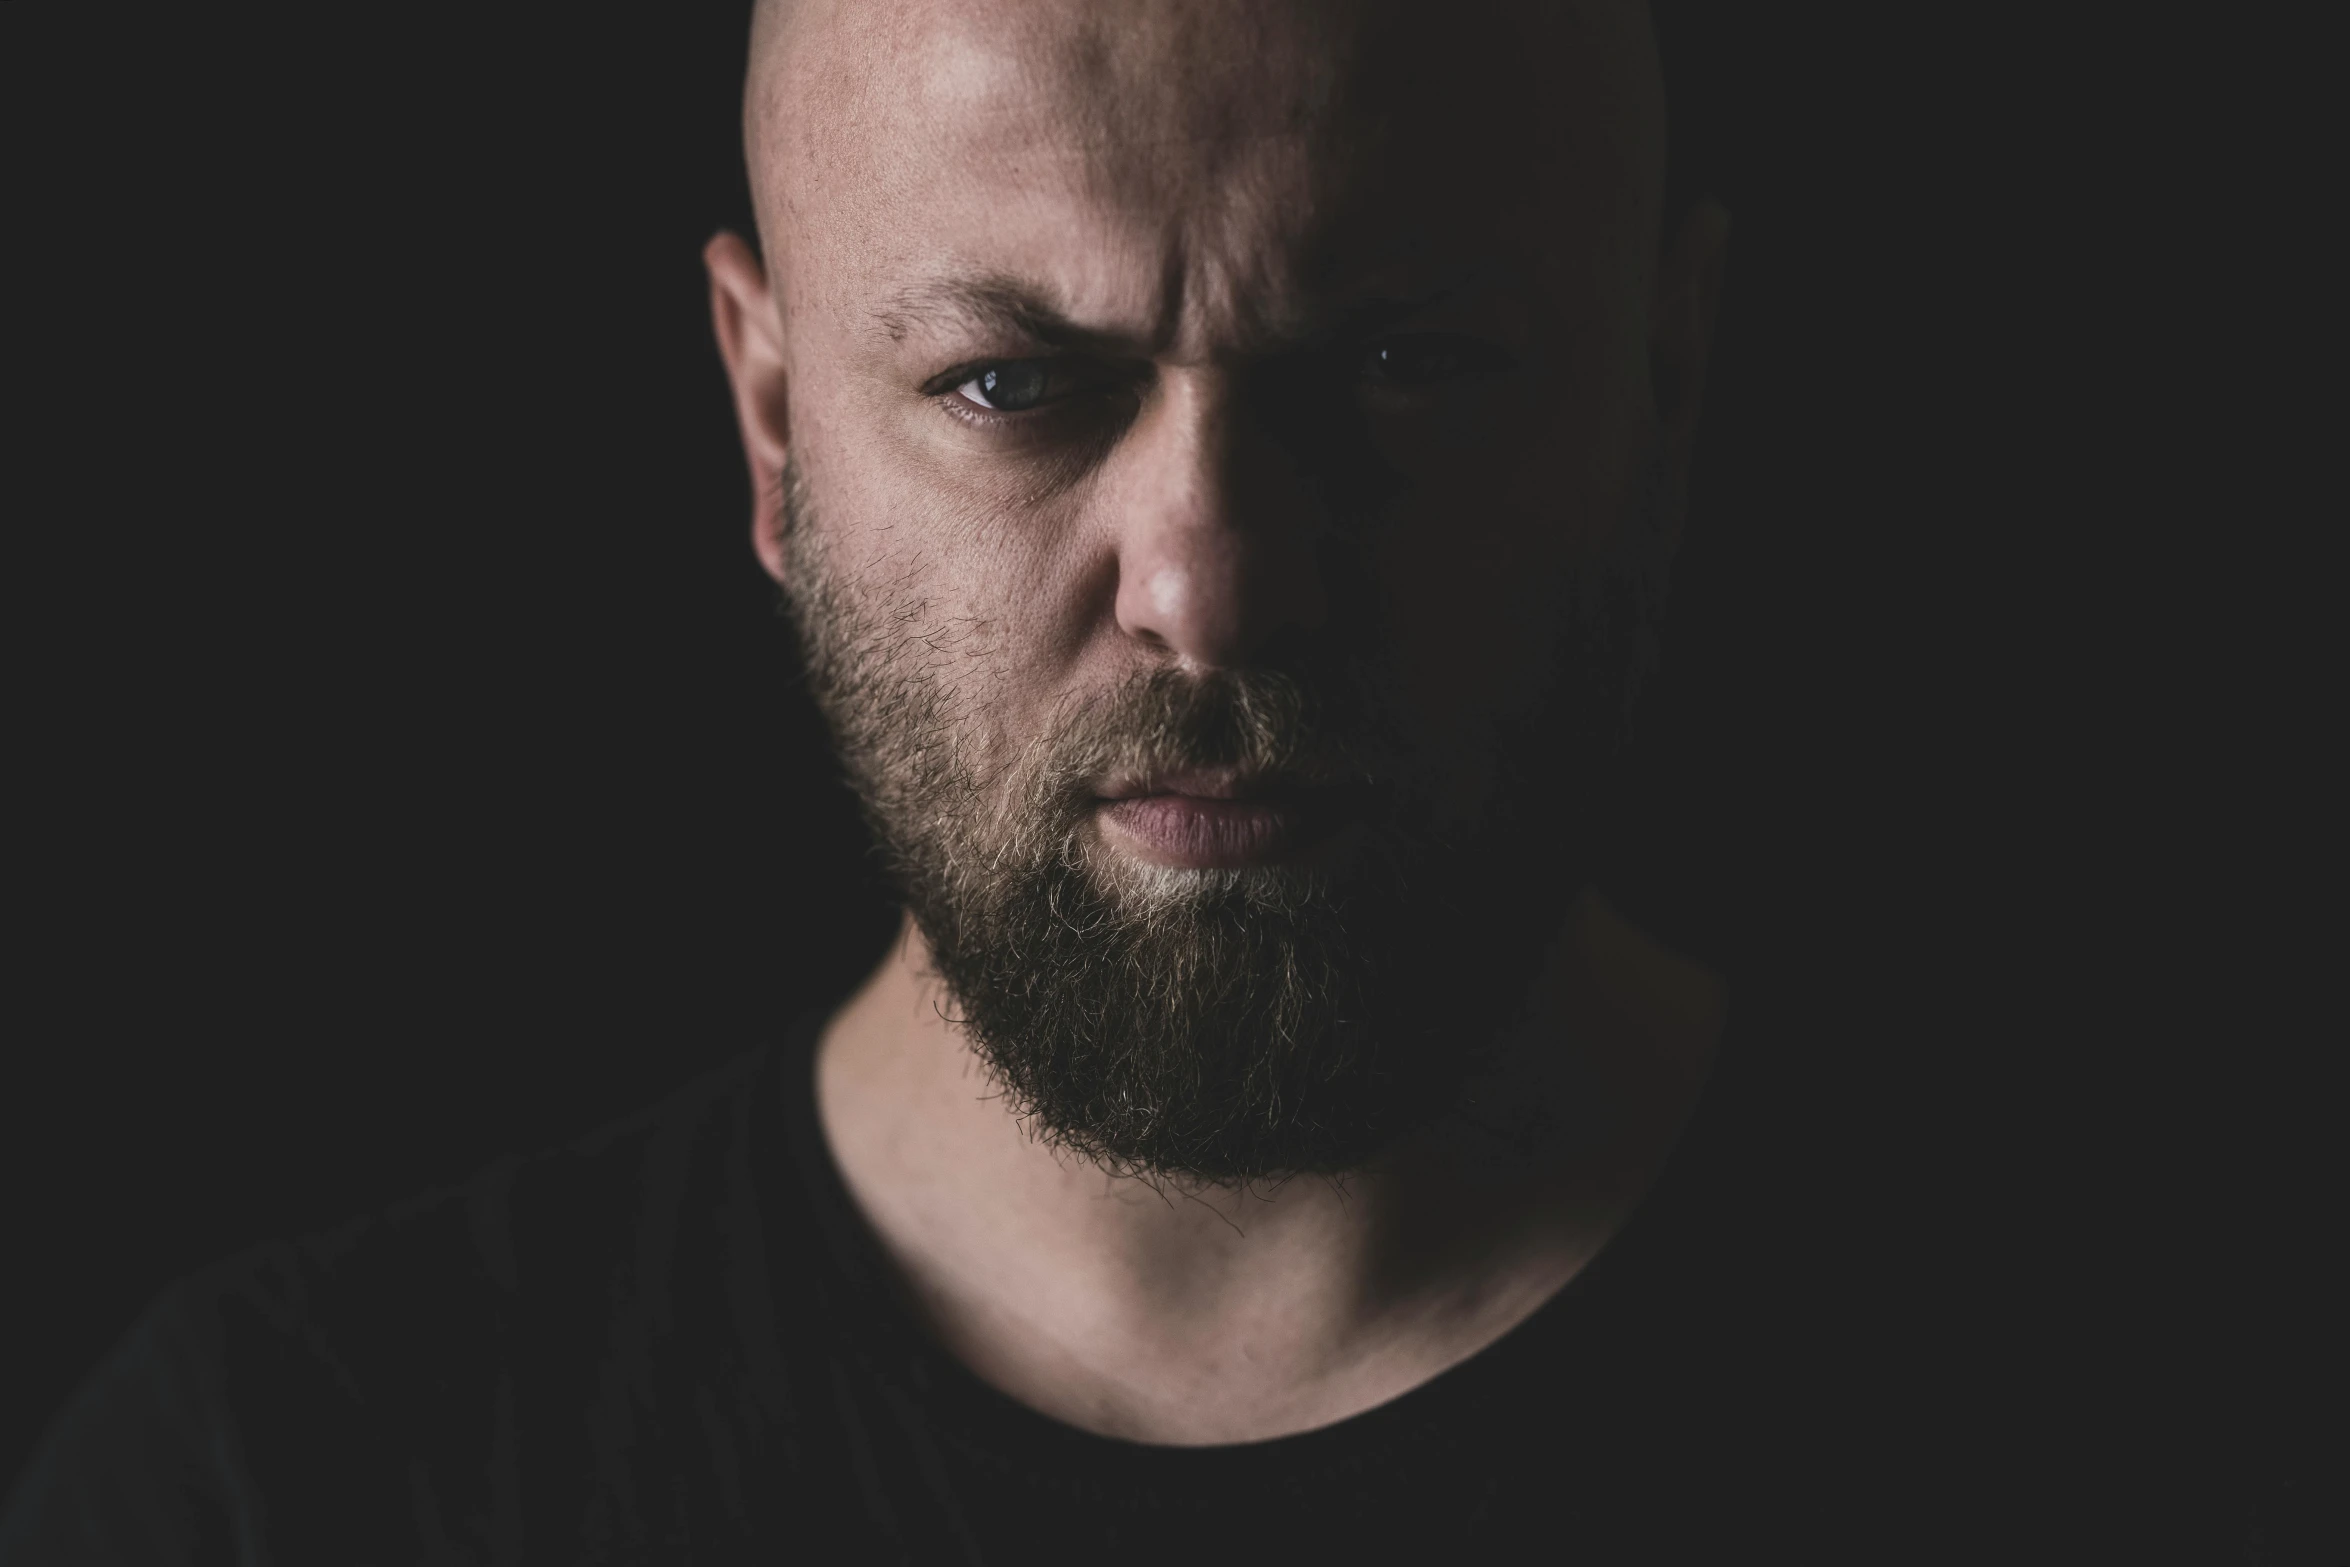 a man with a beard on a dark background